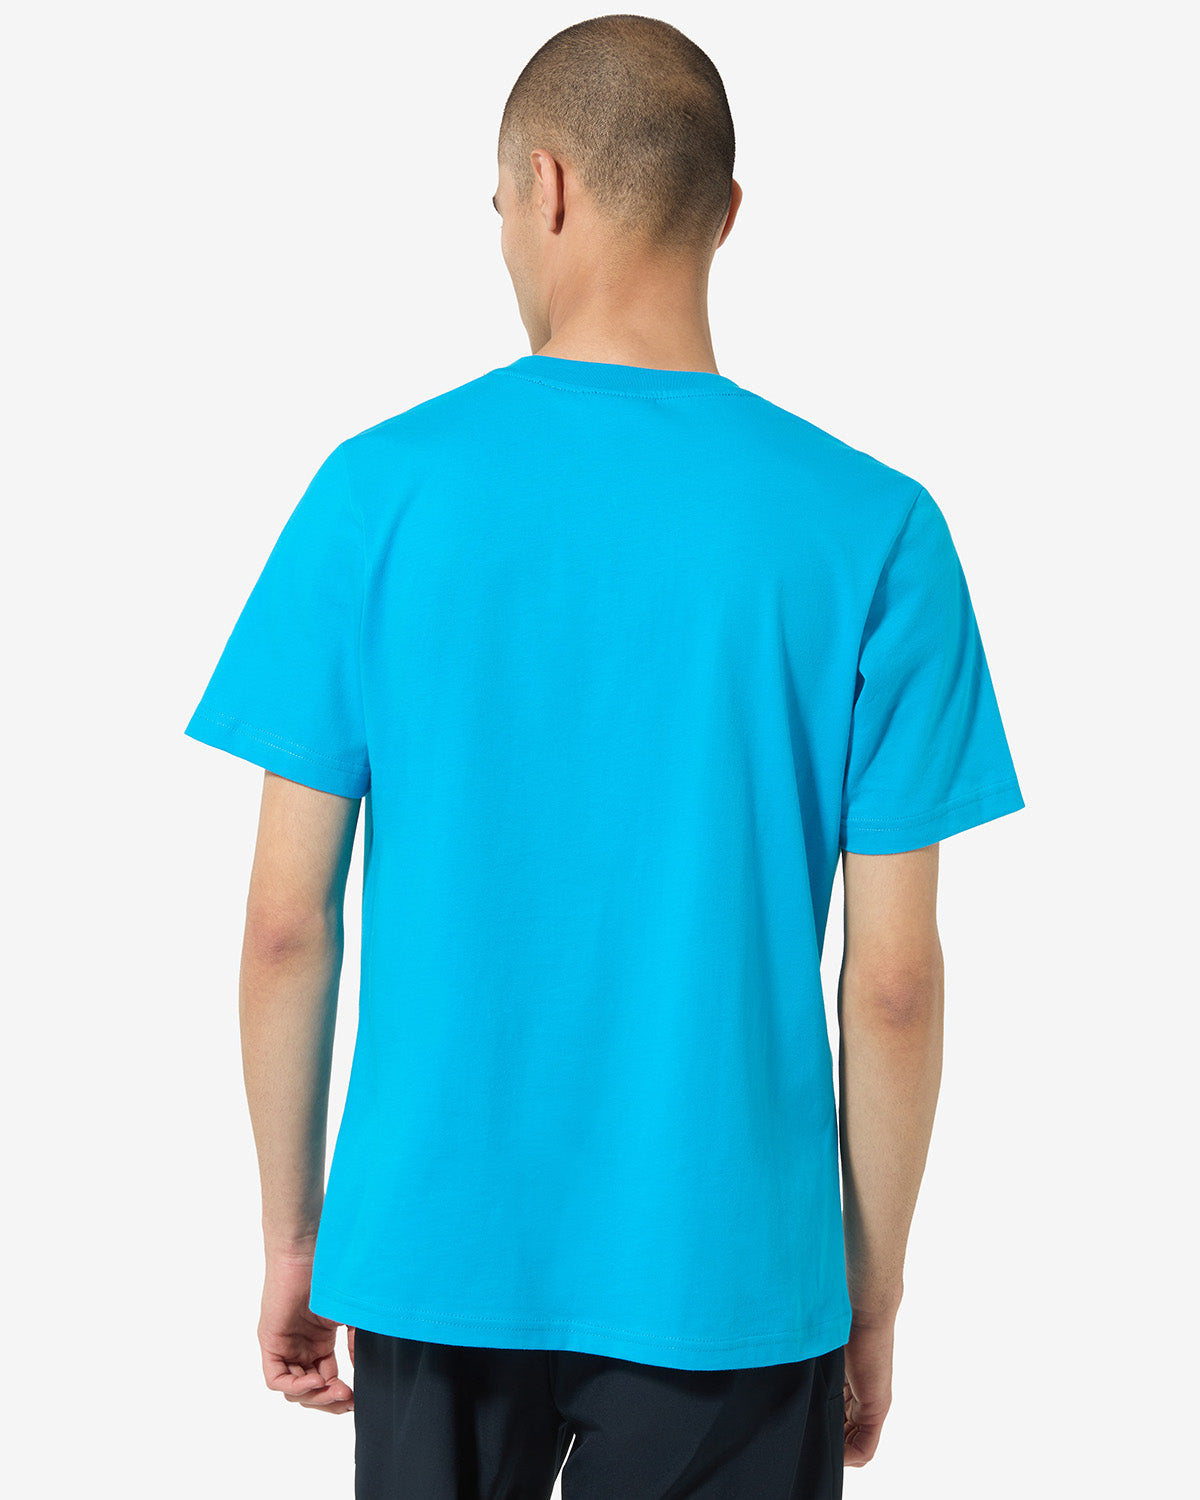 Urban T-Shirts: Australian Sportswear